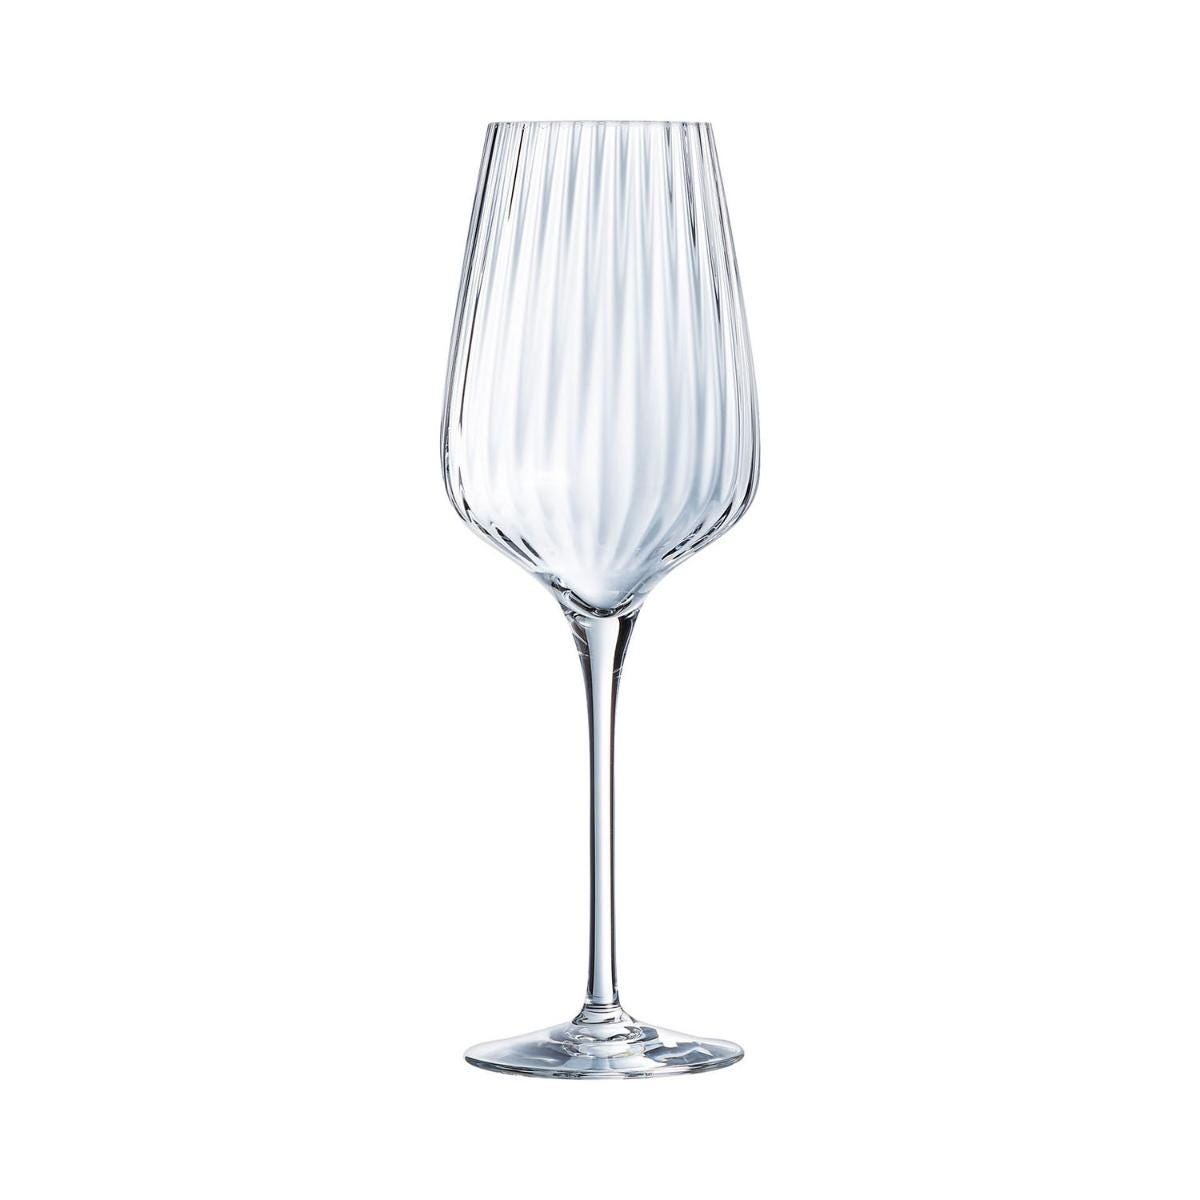 Copas Vino Cristal 690ml (6 unidades) - Buqué